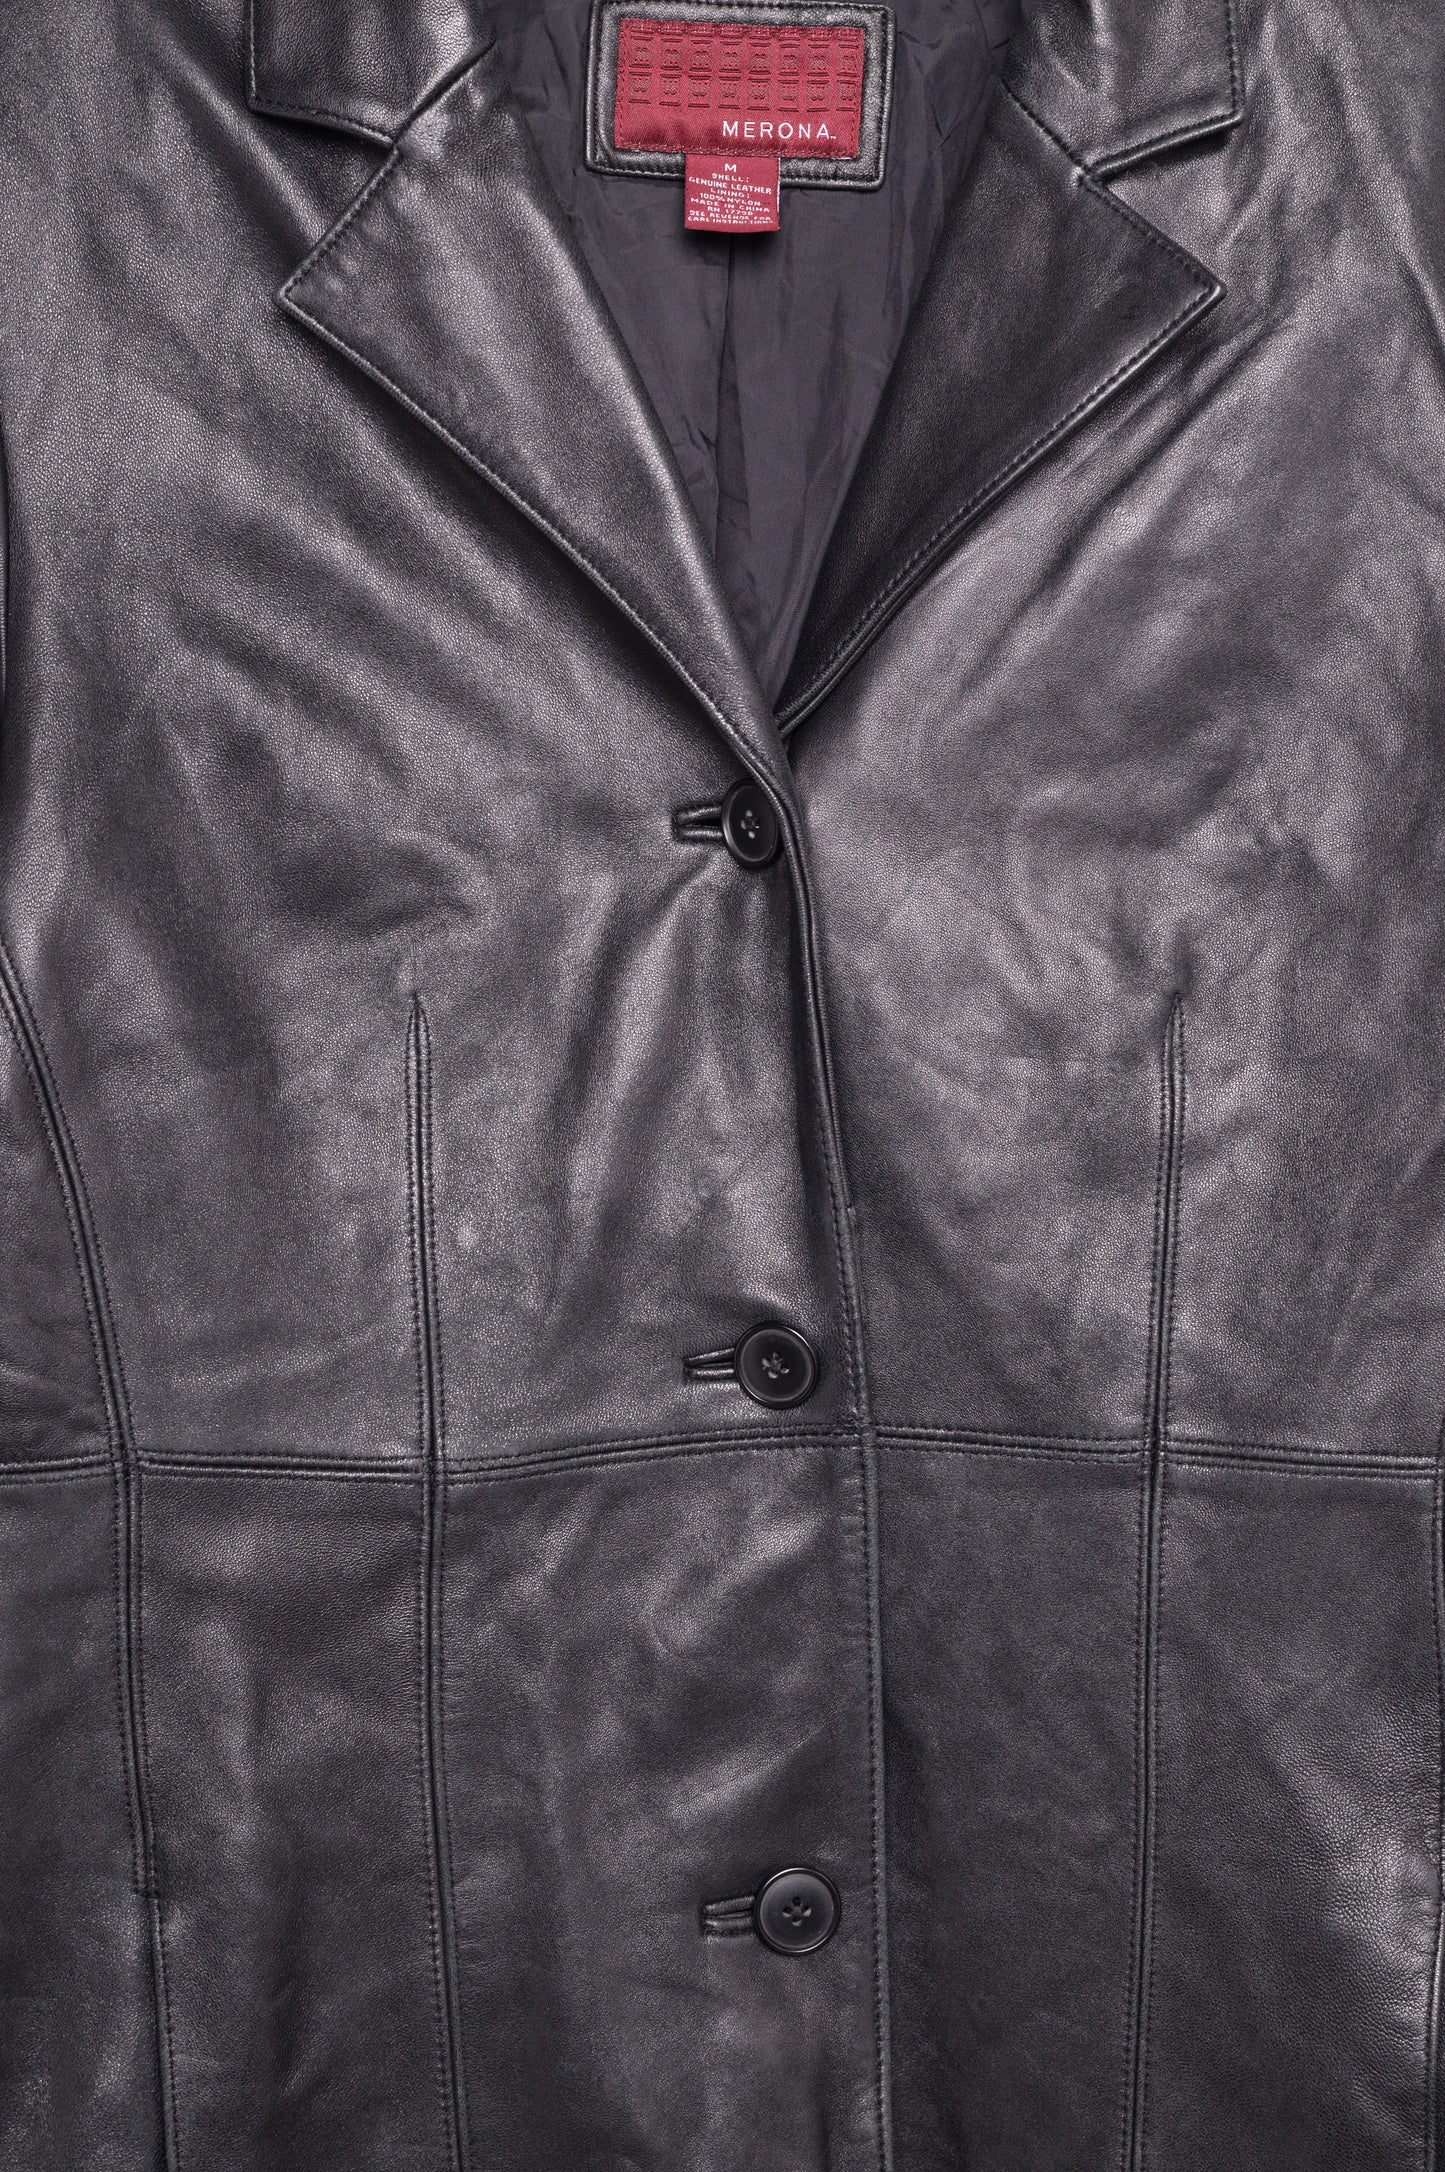 1990s Soft Long Leather Jacket